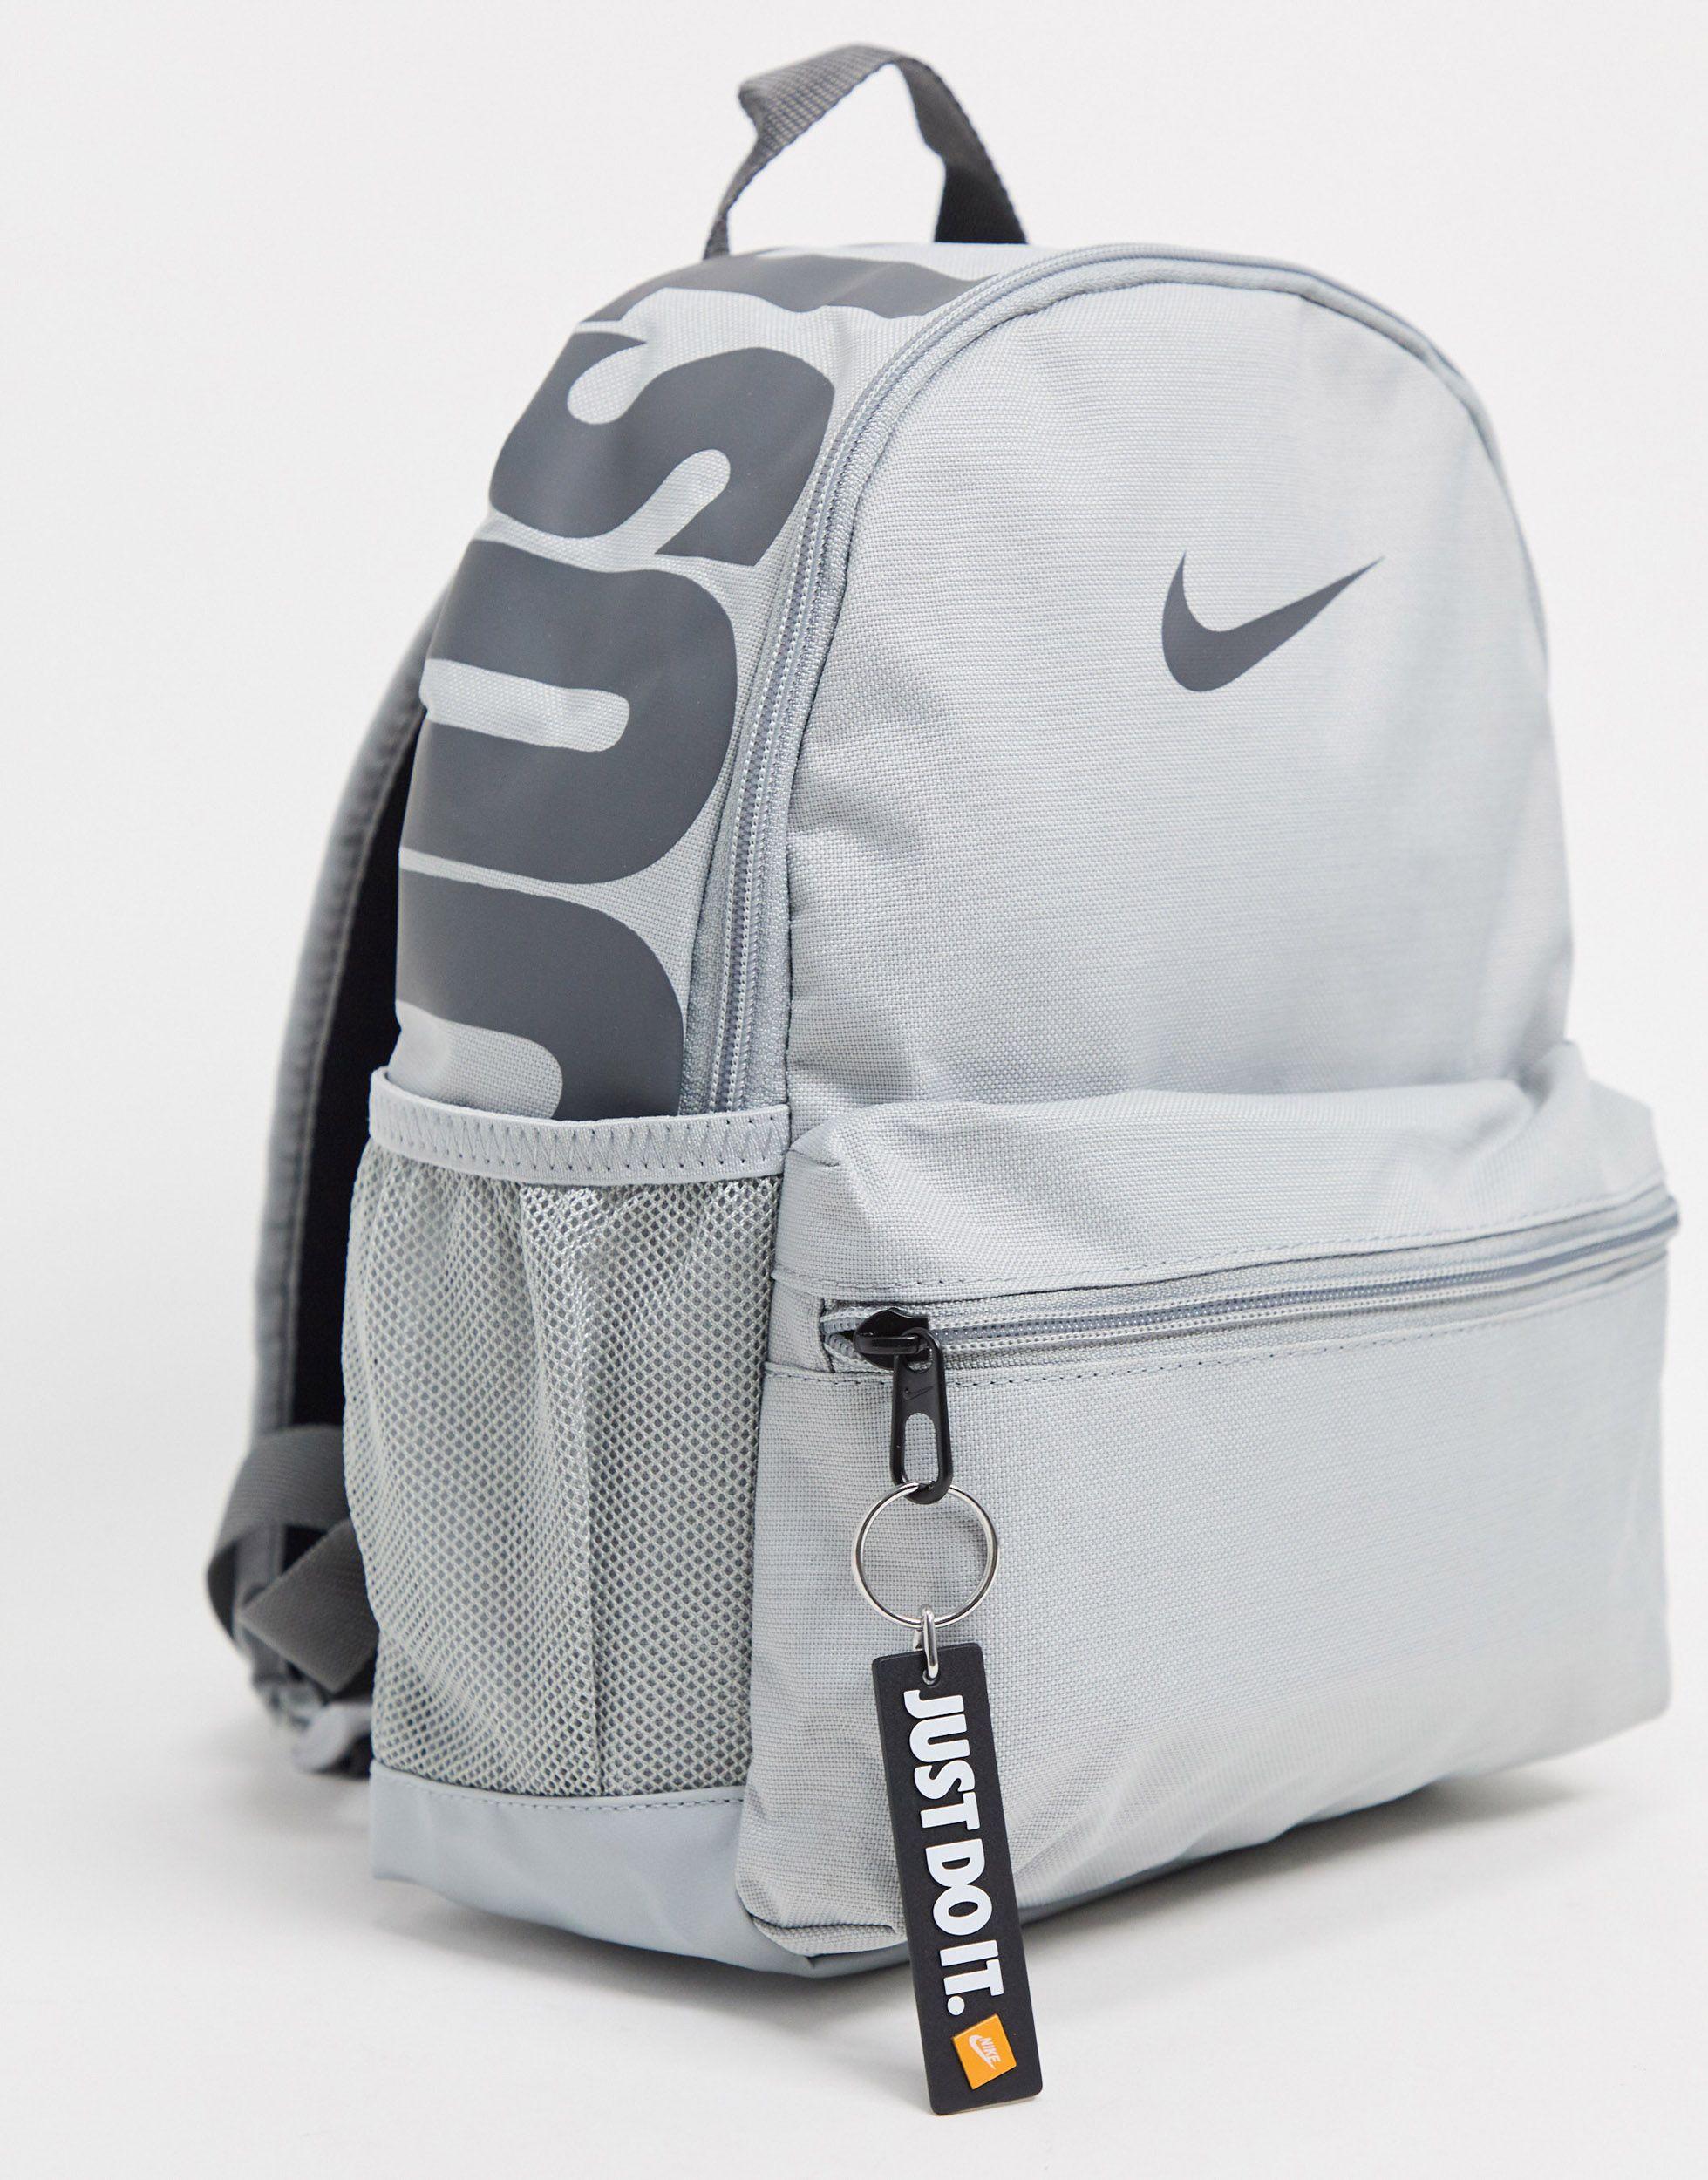 Nike – Just Do It – Kleiner Backpack in Grau | Lyst AT